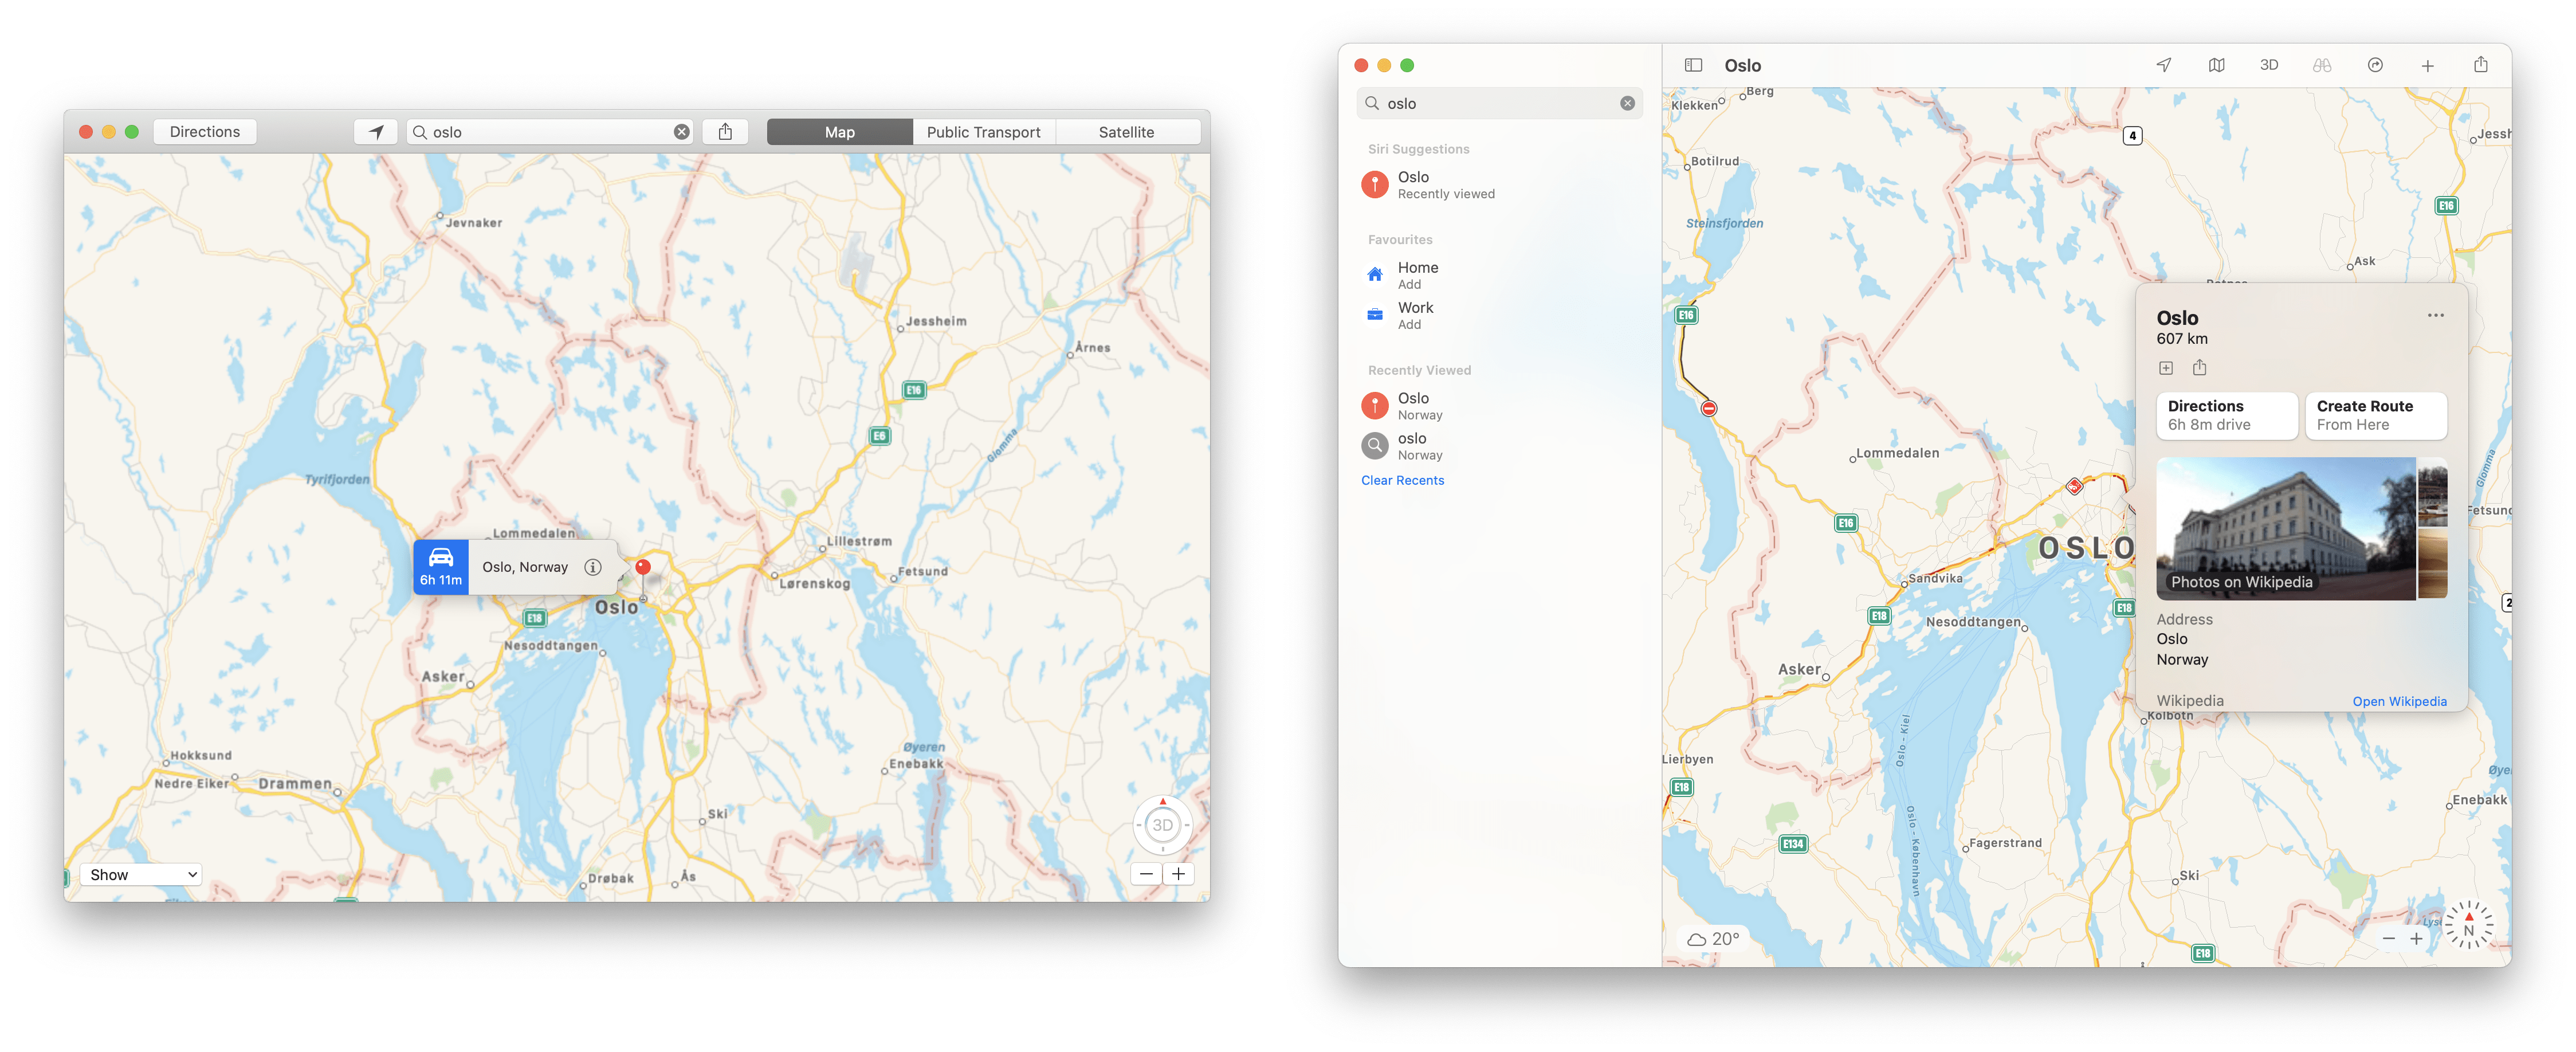 apple-maps-macos-catalina-big-sur-comparison